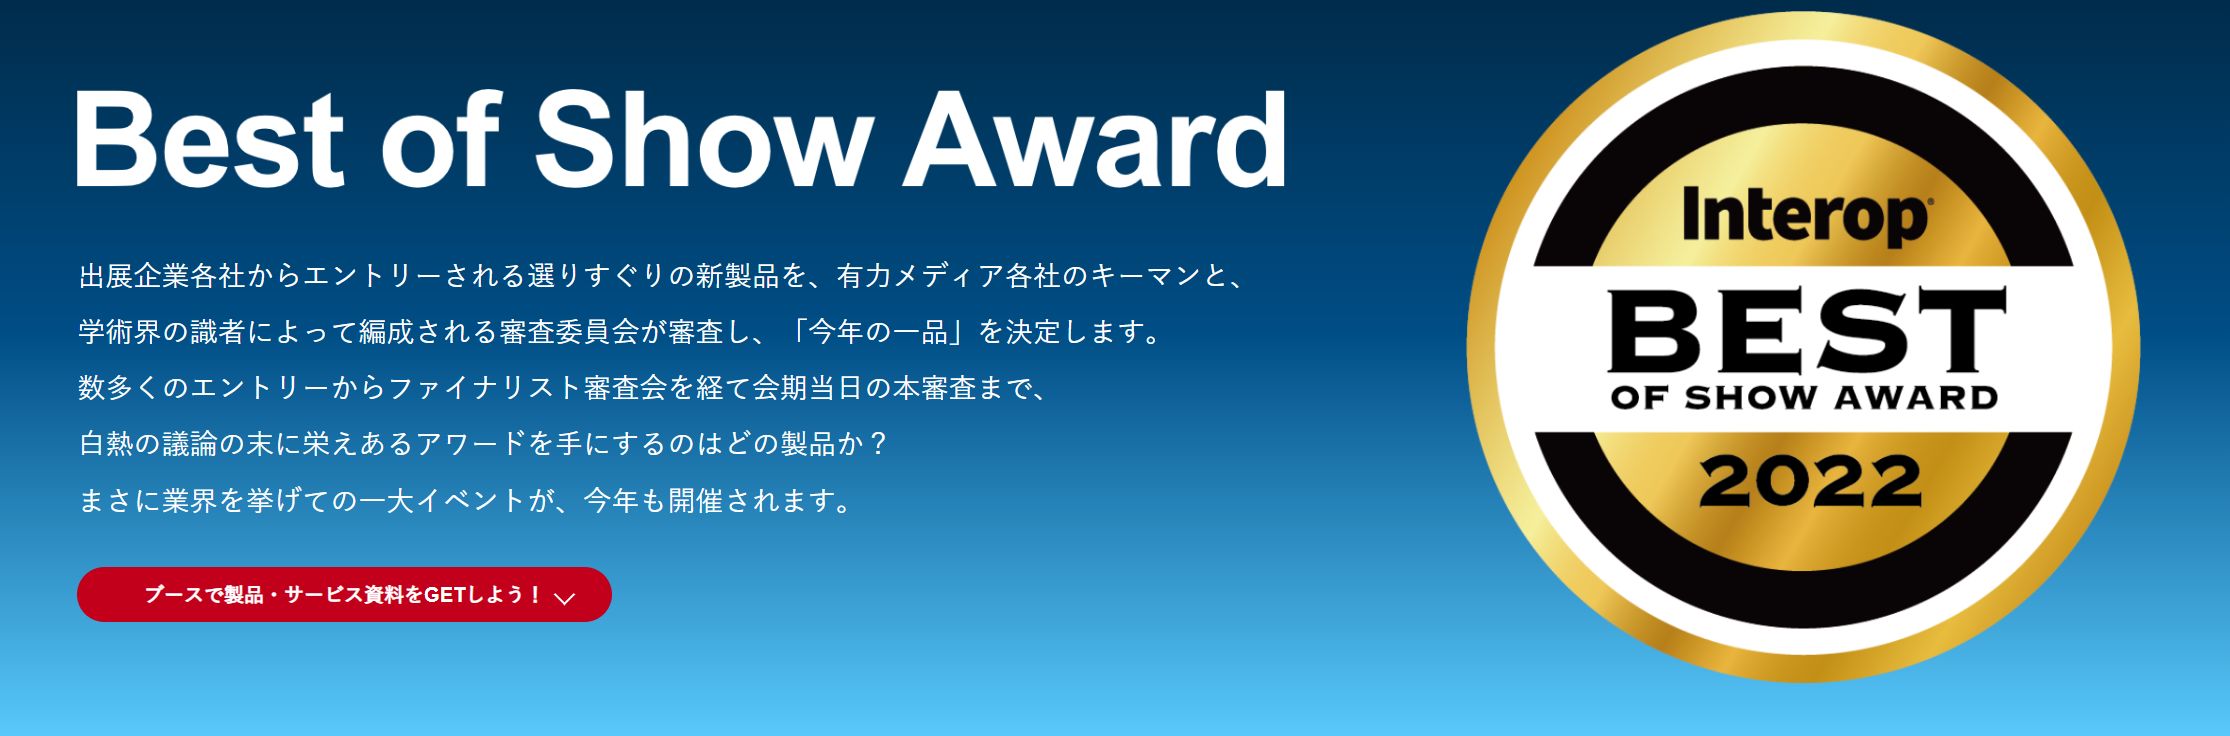 Interop Tokyo 2022 Best of show award